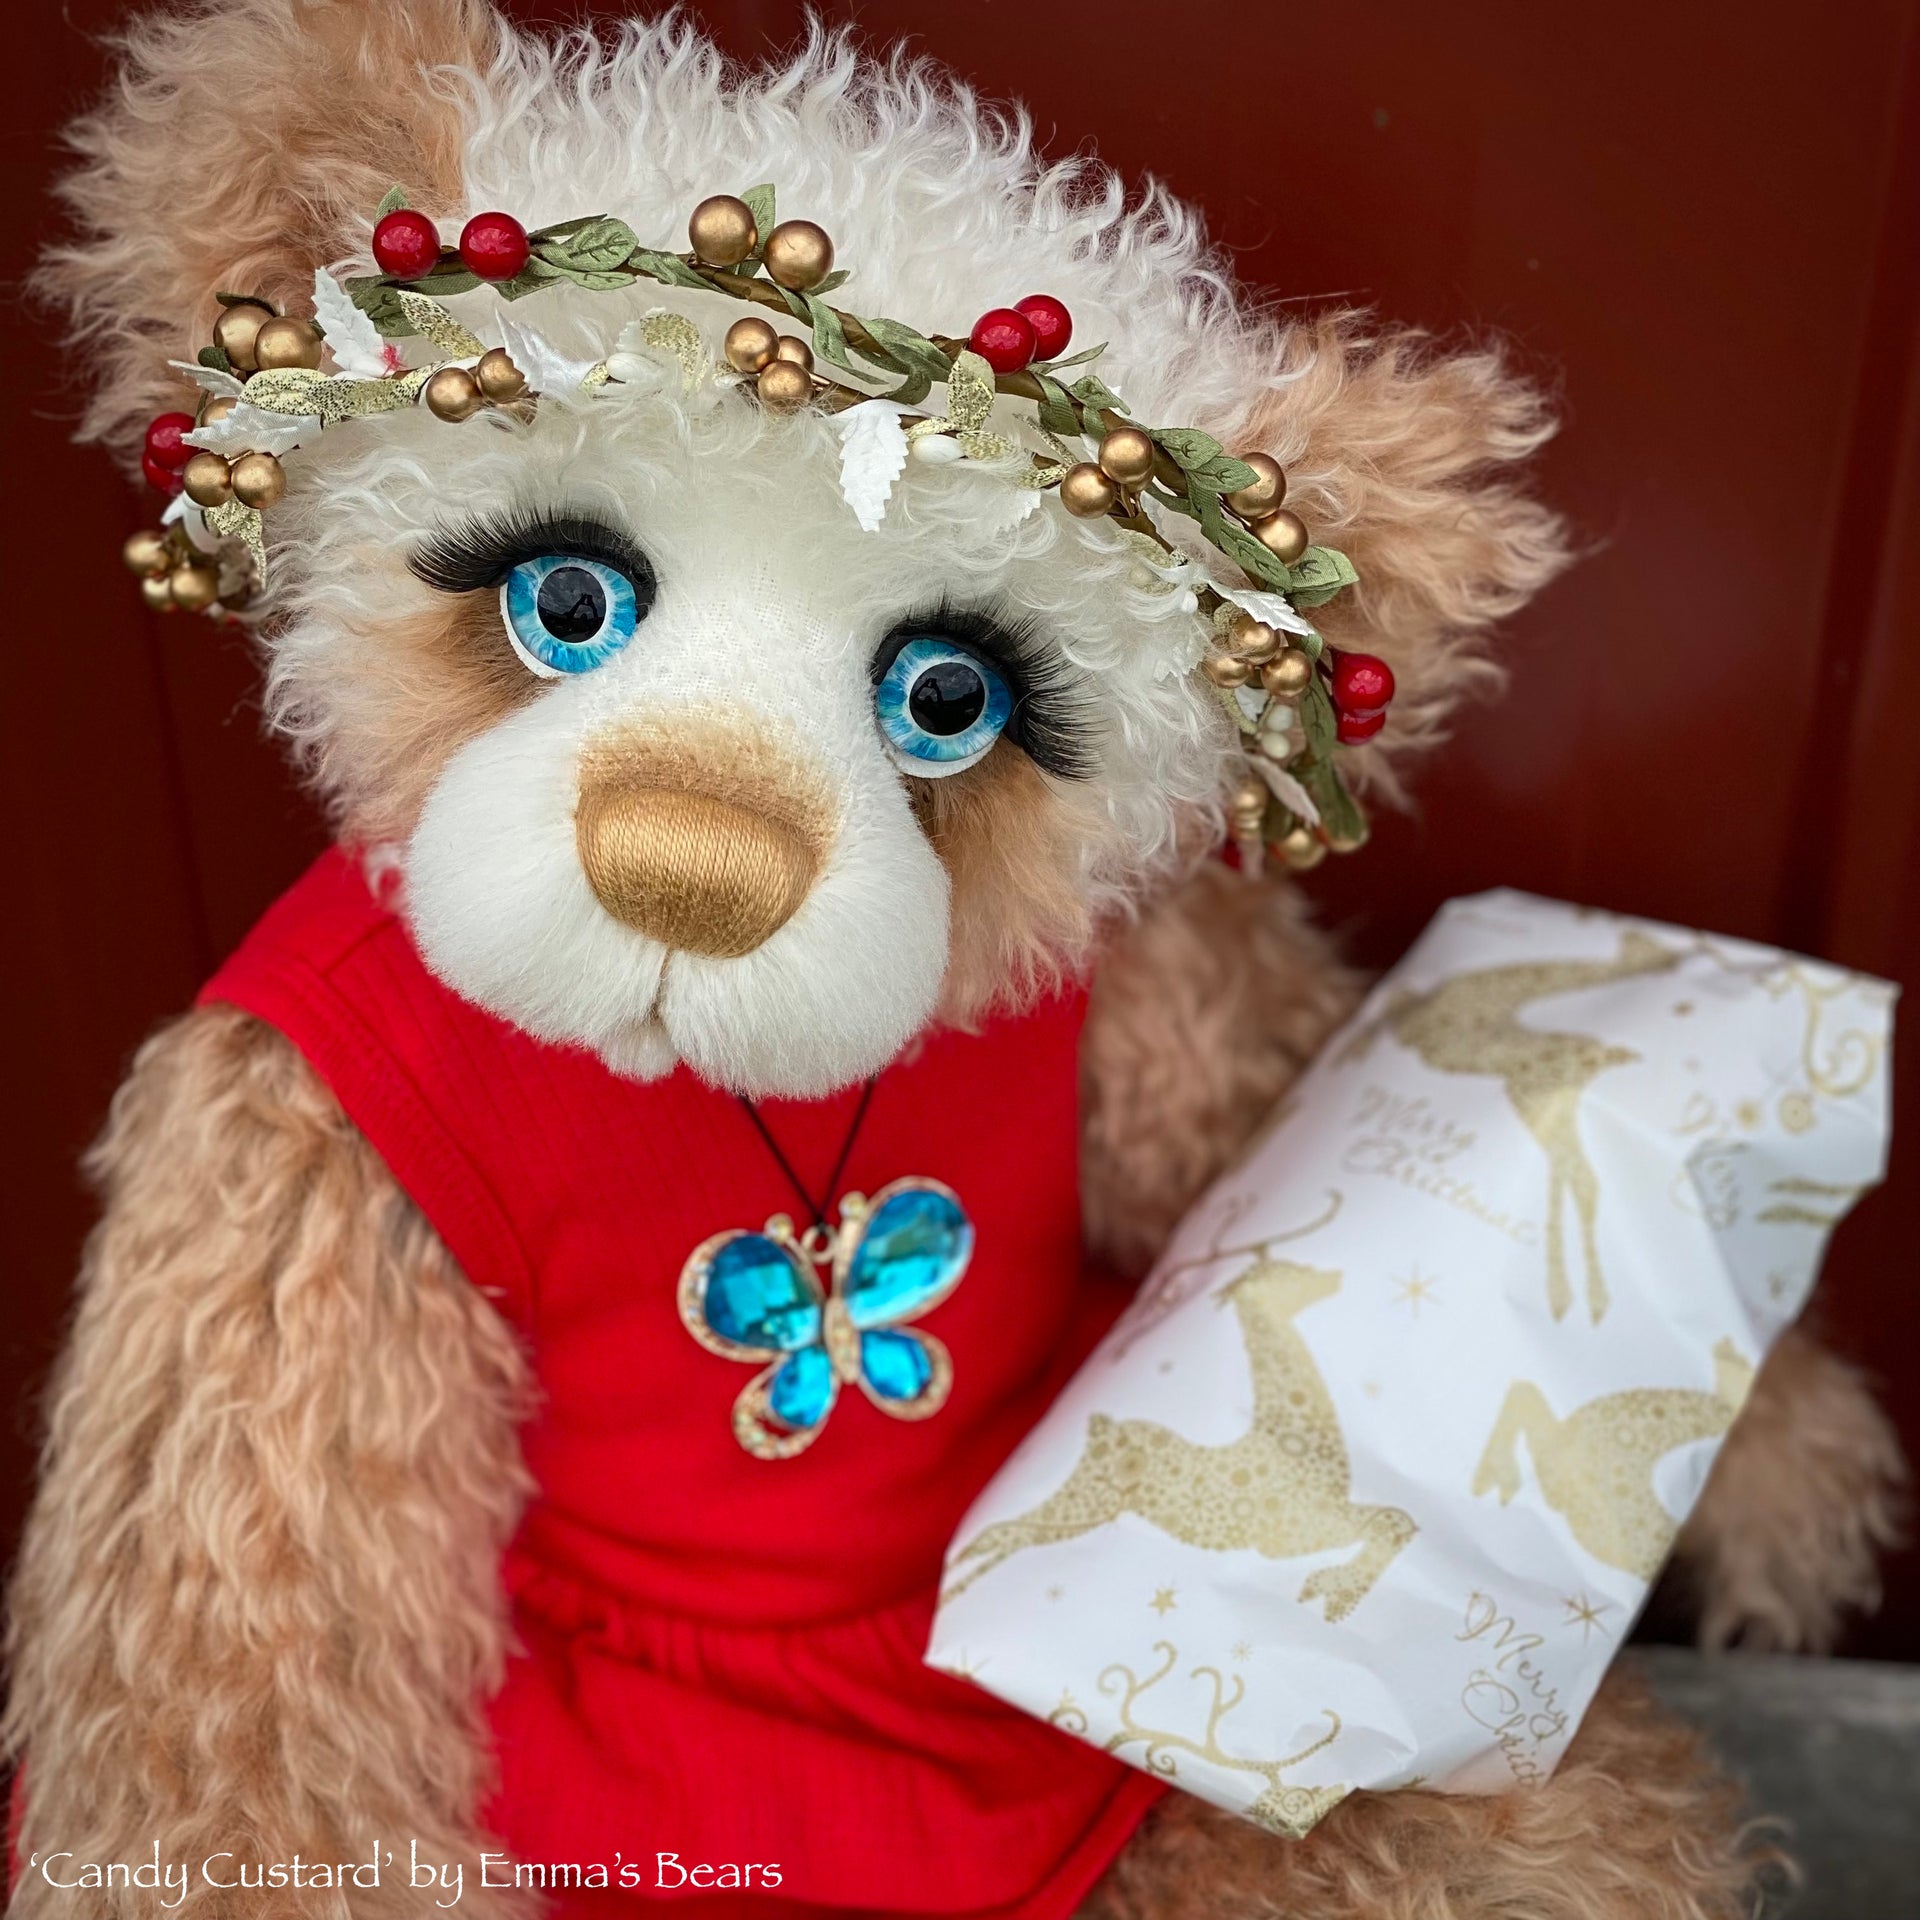 Candy Custard - 21" Christmas 2023 Artist Bear by Emma's Bears - OOAK